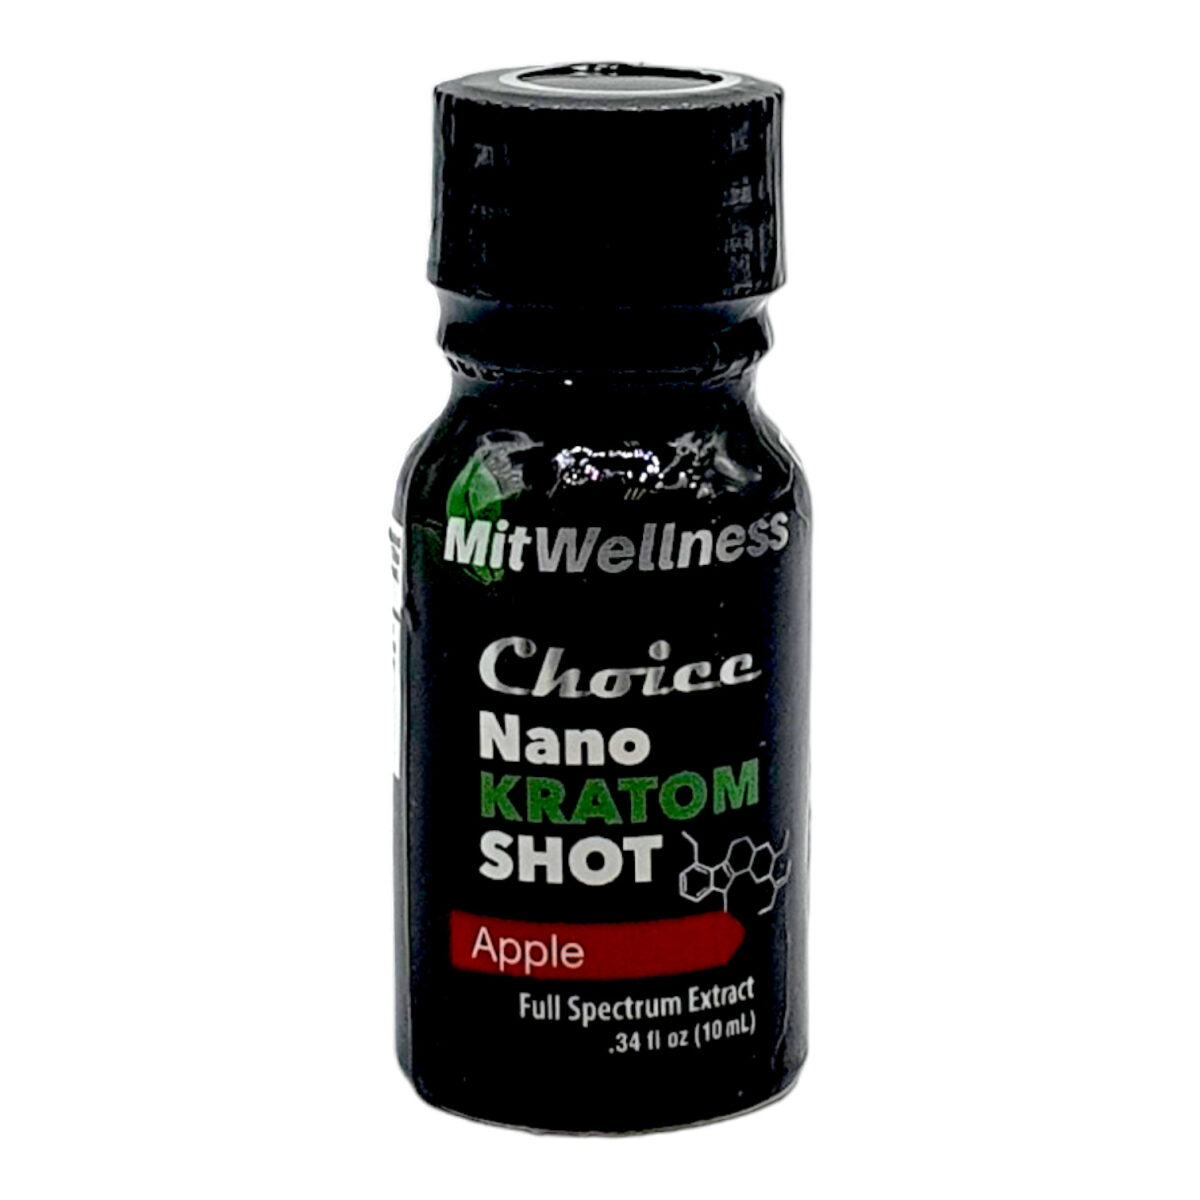 Mit Wellness Choice NANO Apple Kratom Shot – 10ml